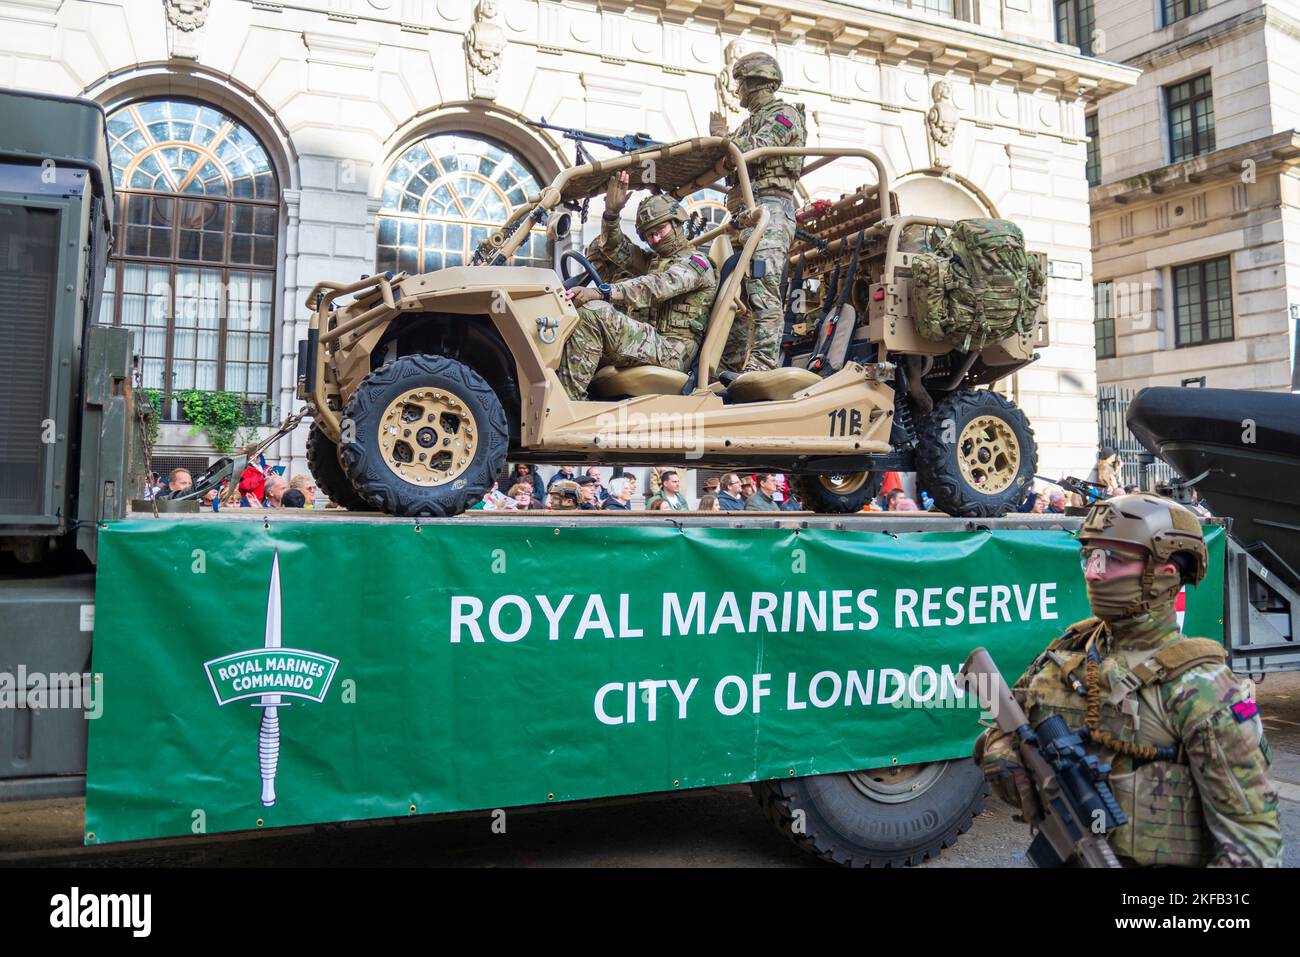 Royal Marines Reserve City of London schweben bei der Lord Mayor's Show Parade in der City of London, Großbritannien. Royal Marines Commando Polaris MRZR-D4-Display Stockfoto